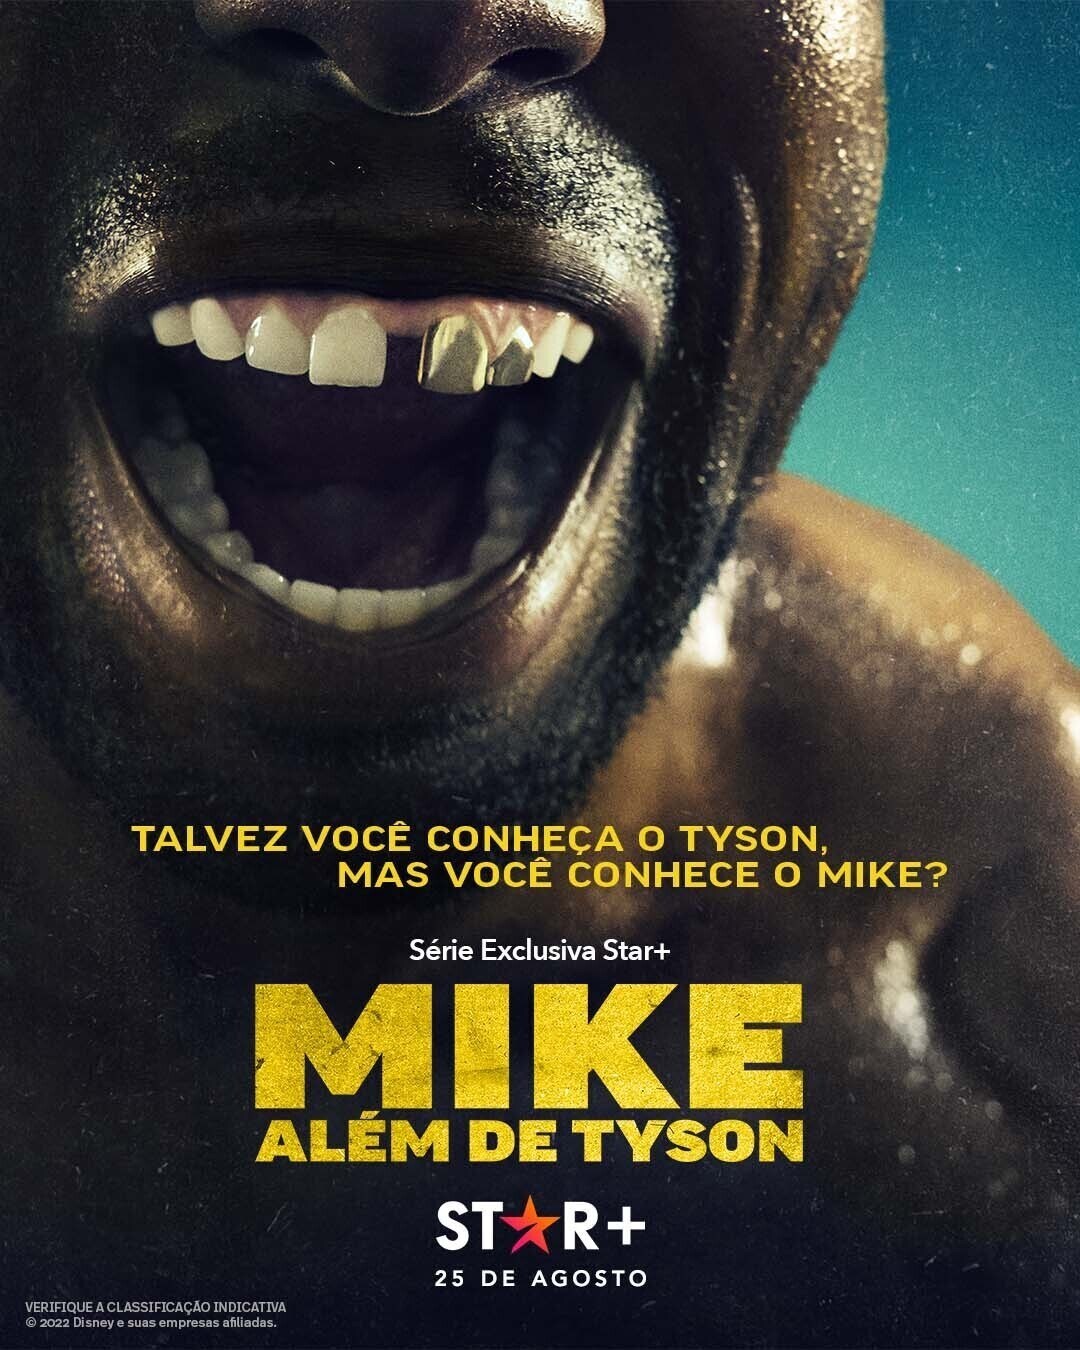 Mike Além de Tyson